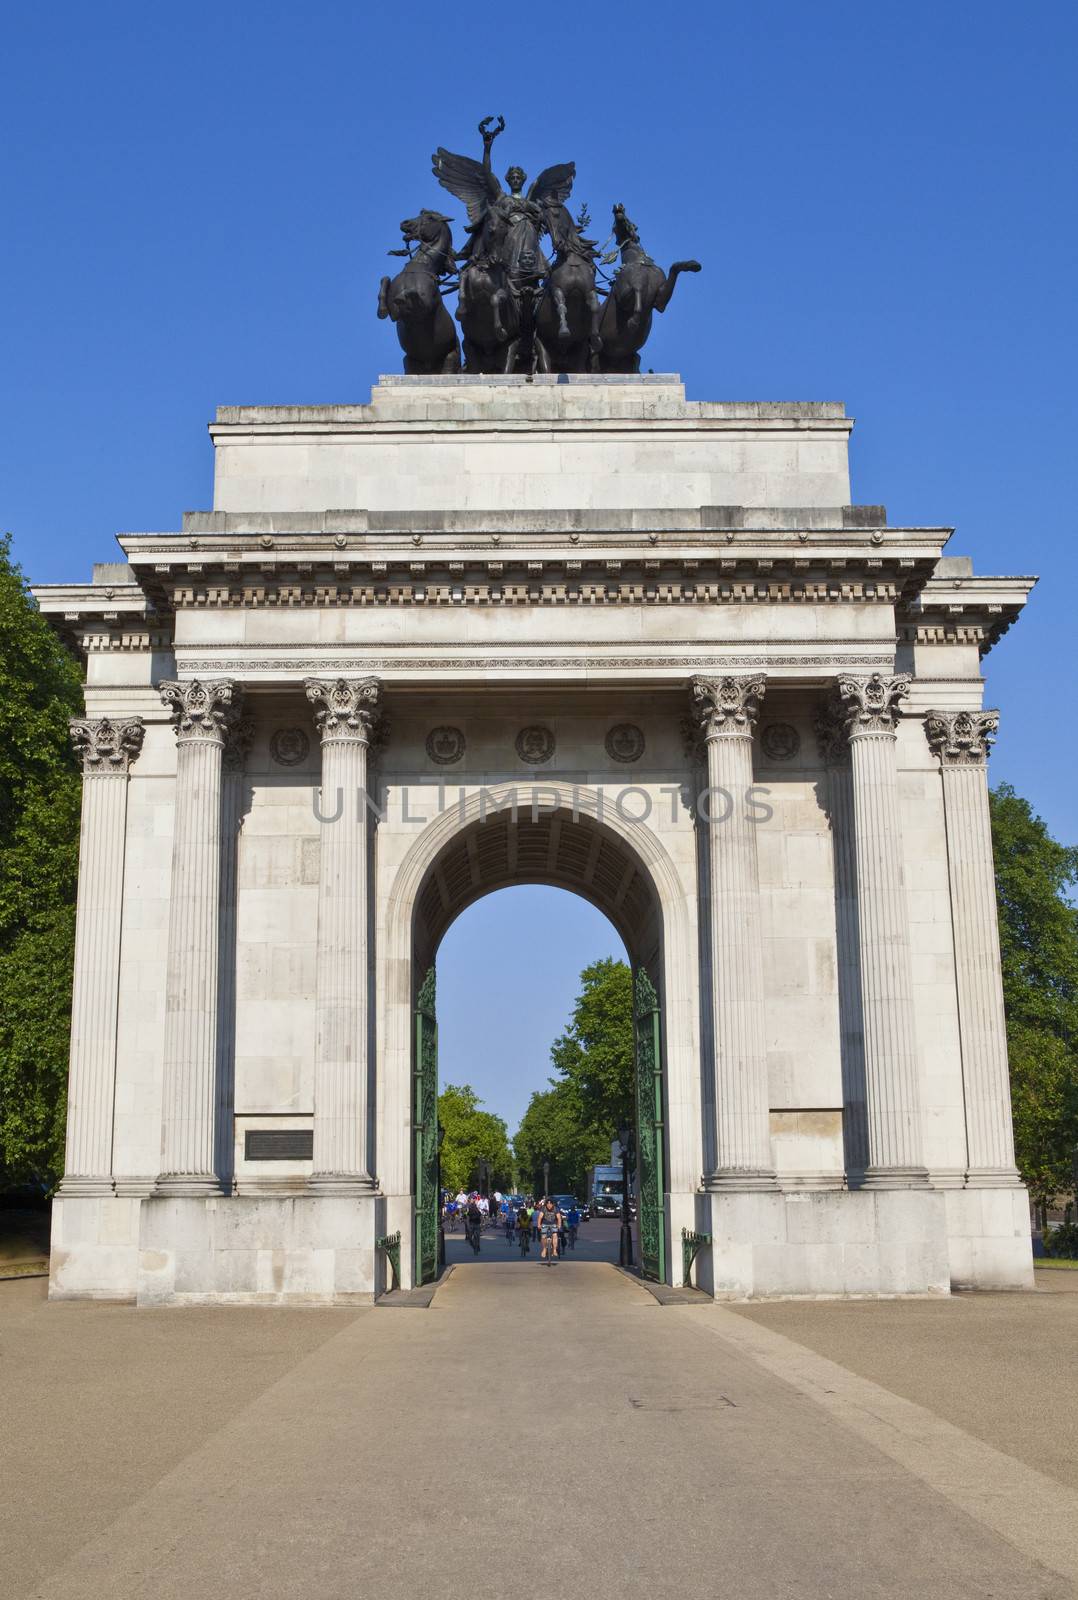 Wellington Arch in London by chrisdorney